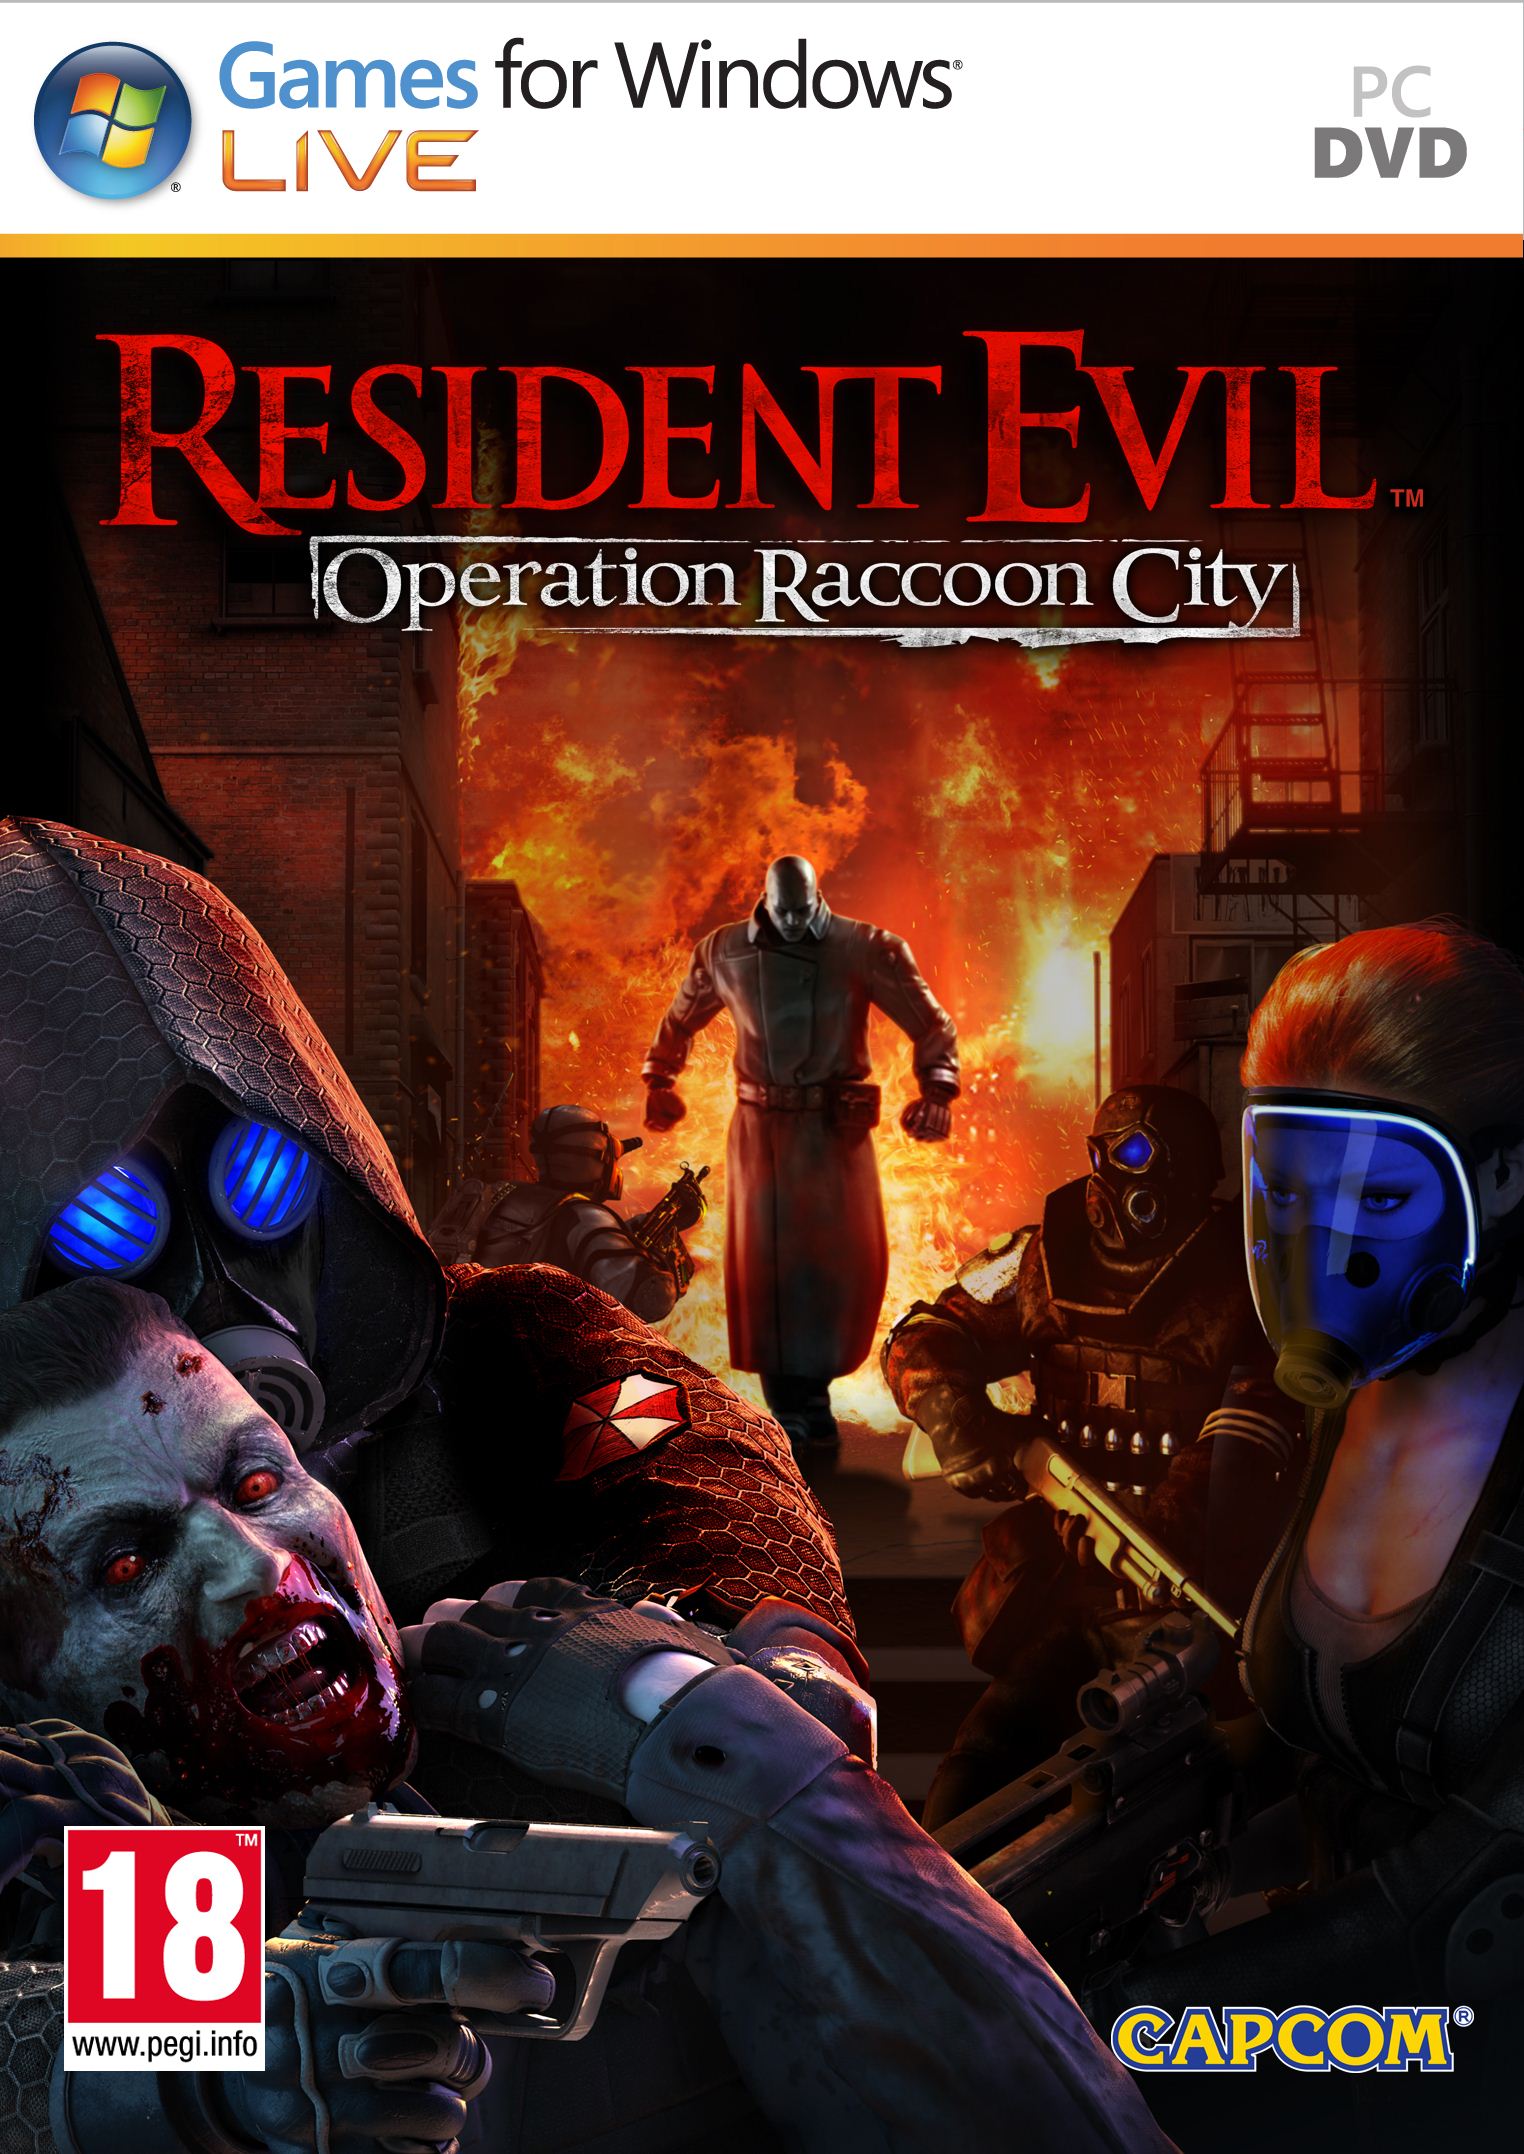 Resident Evil: Operation Raccoon City (GFWL) + GIFT